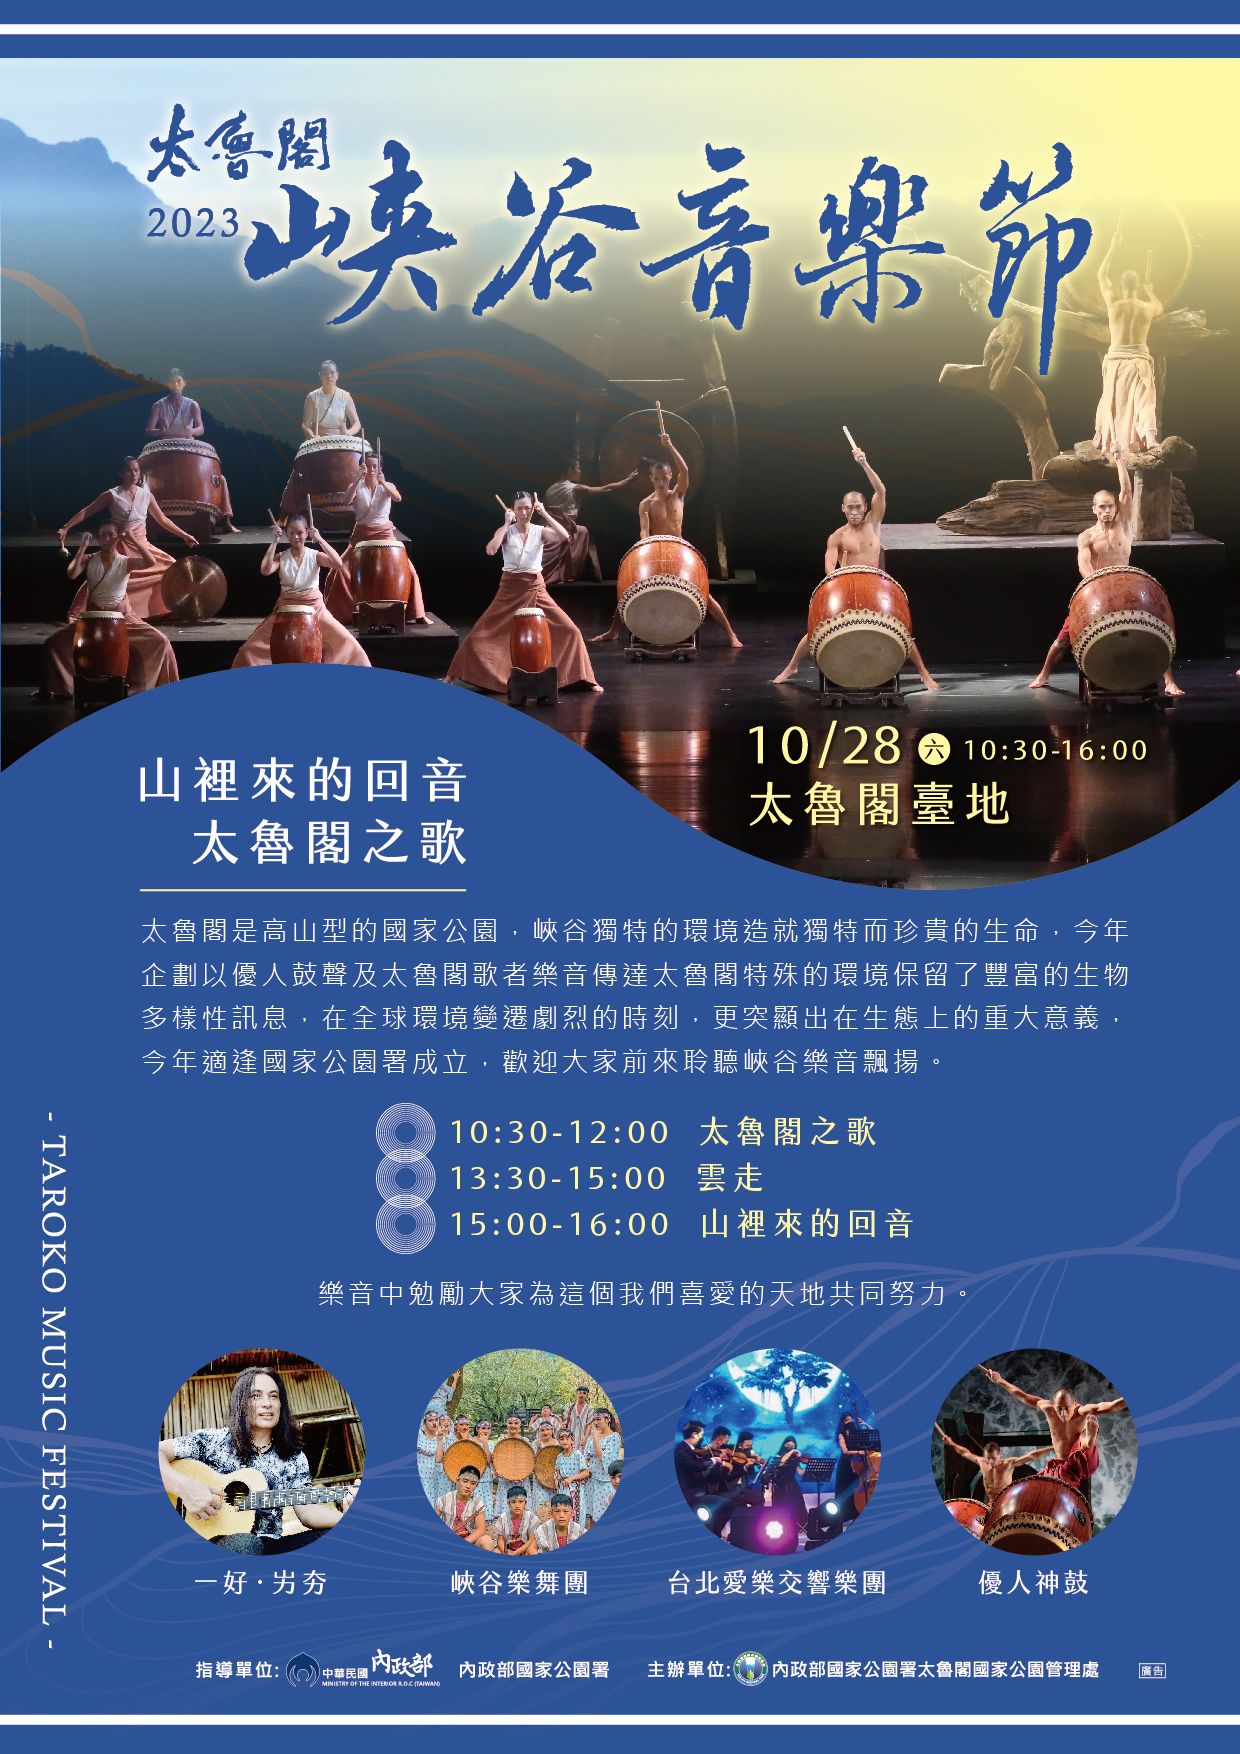 2023 Taroko Gorge Music Festival